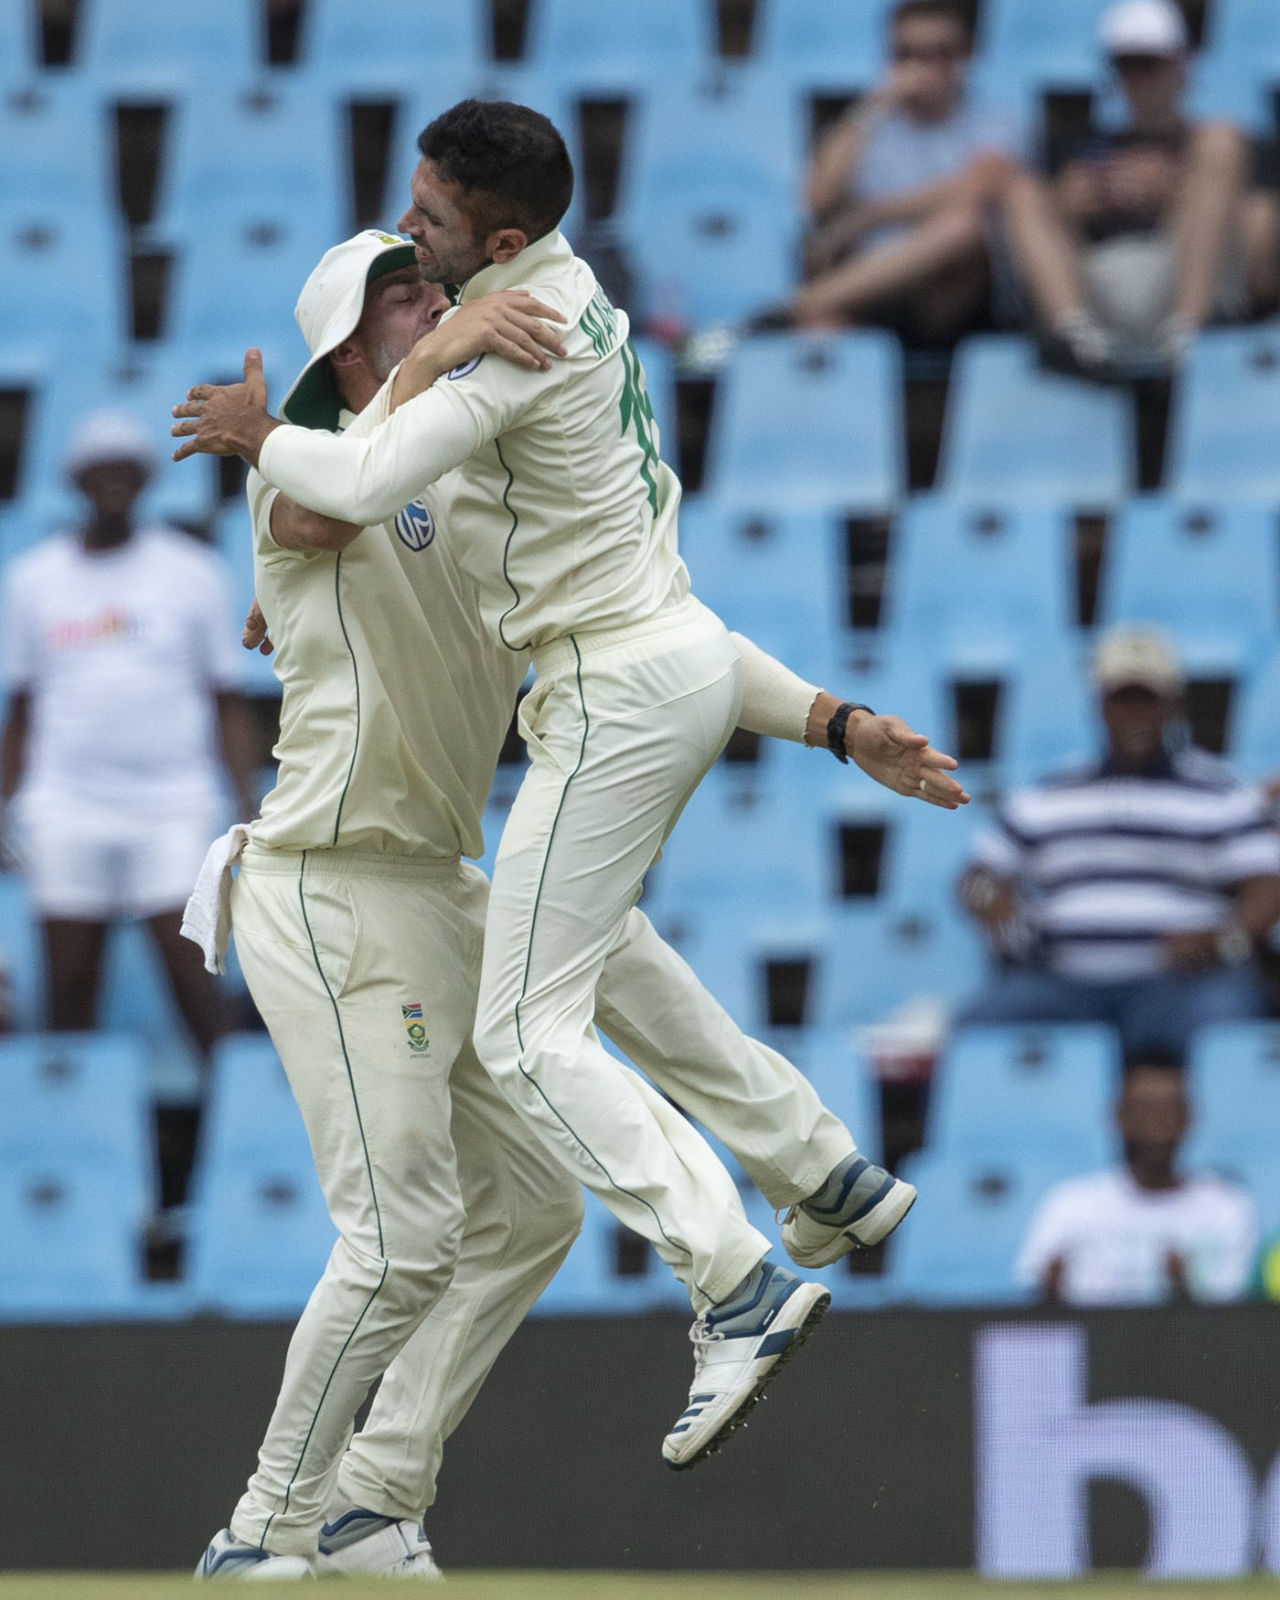 Keshav Maharaj claimed the key wicket of Ben Stokes, South Africa v England, 1st Test, Centurion, 4th day, December 29, 2019